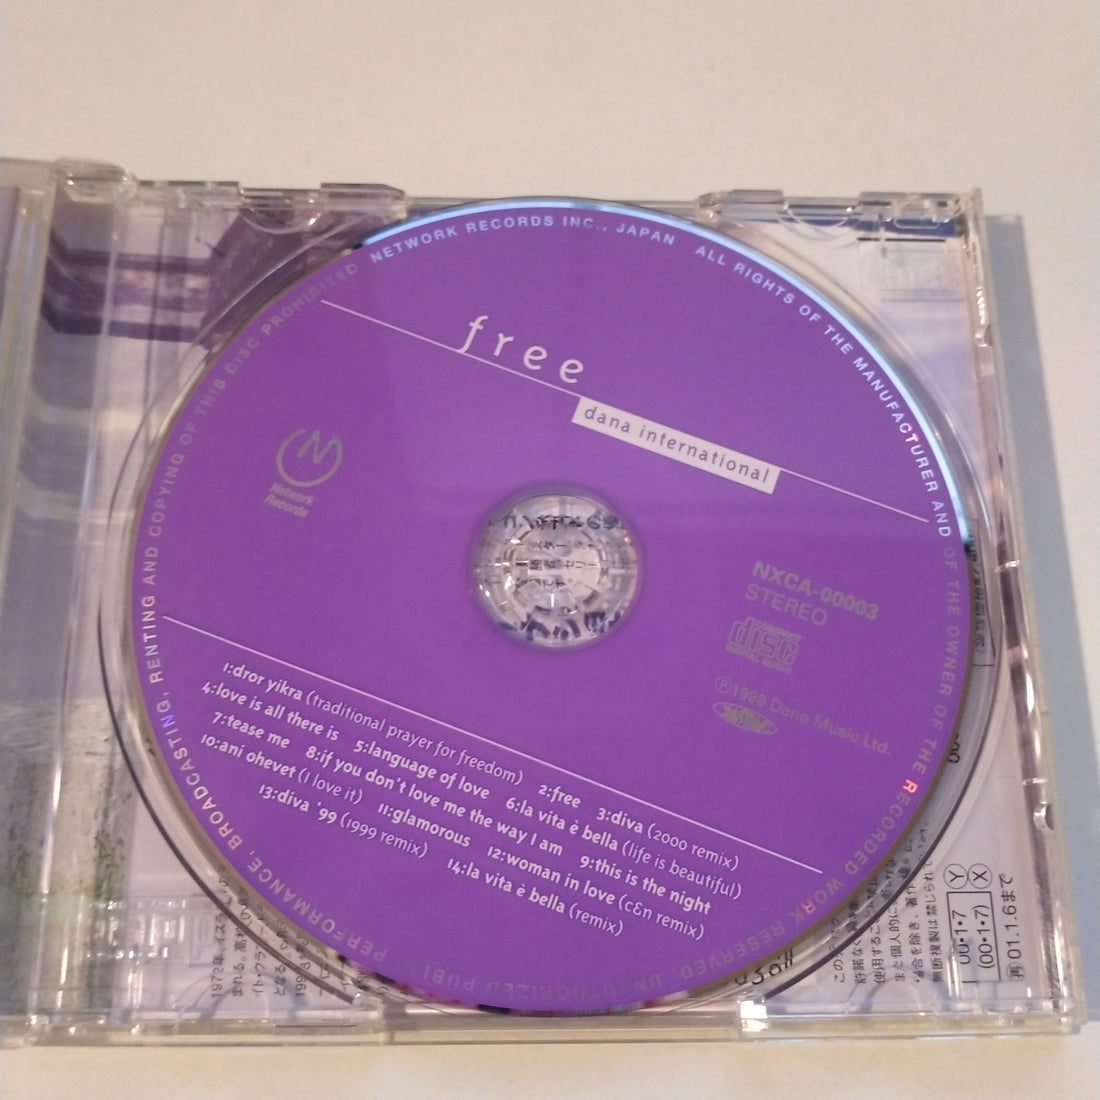 Dana International - Free (CD) (VG+)